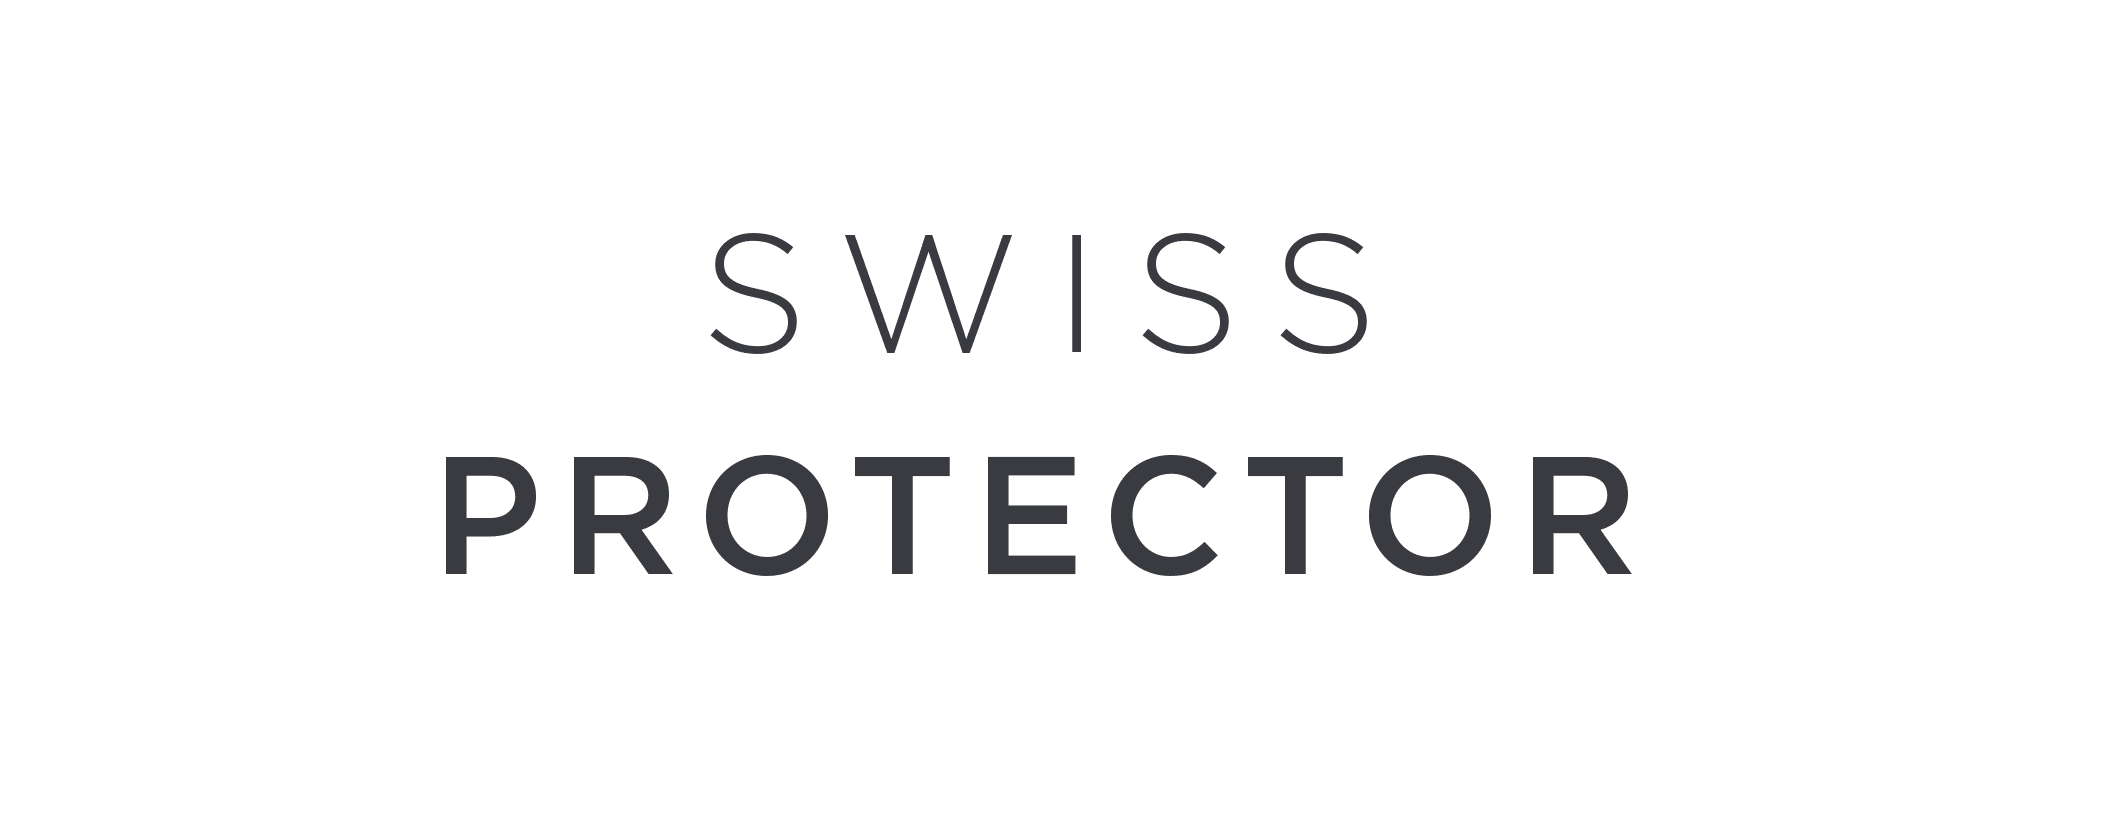 logo Swiss Protector letras grises